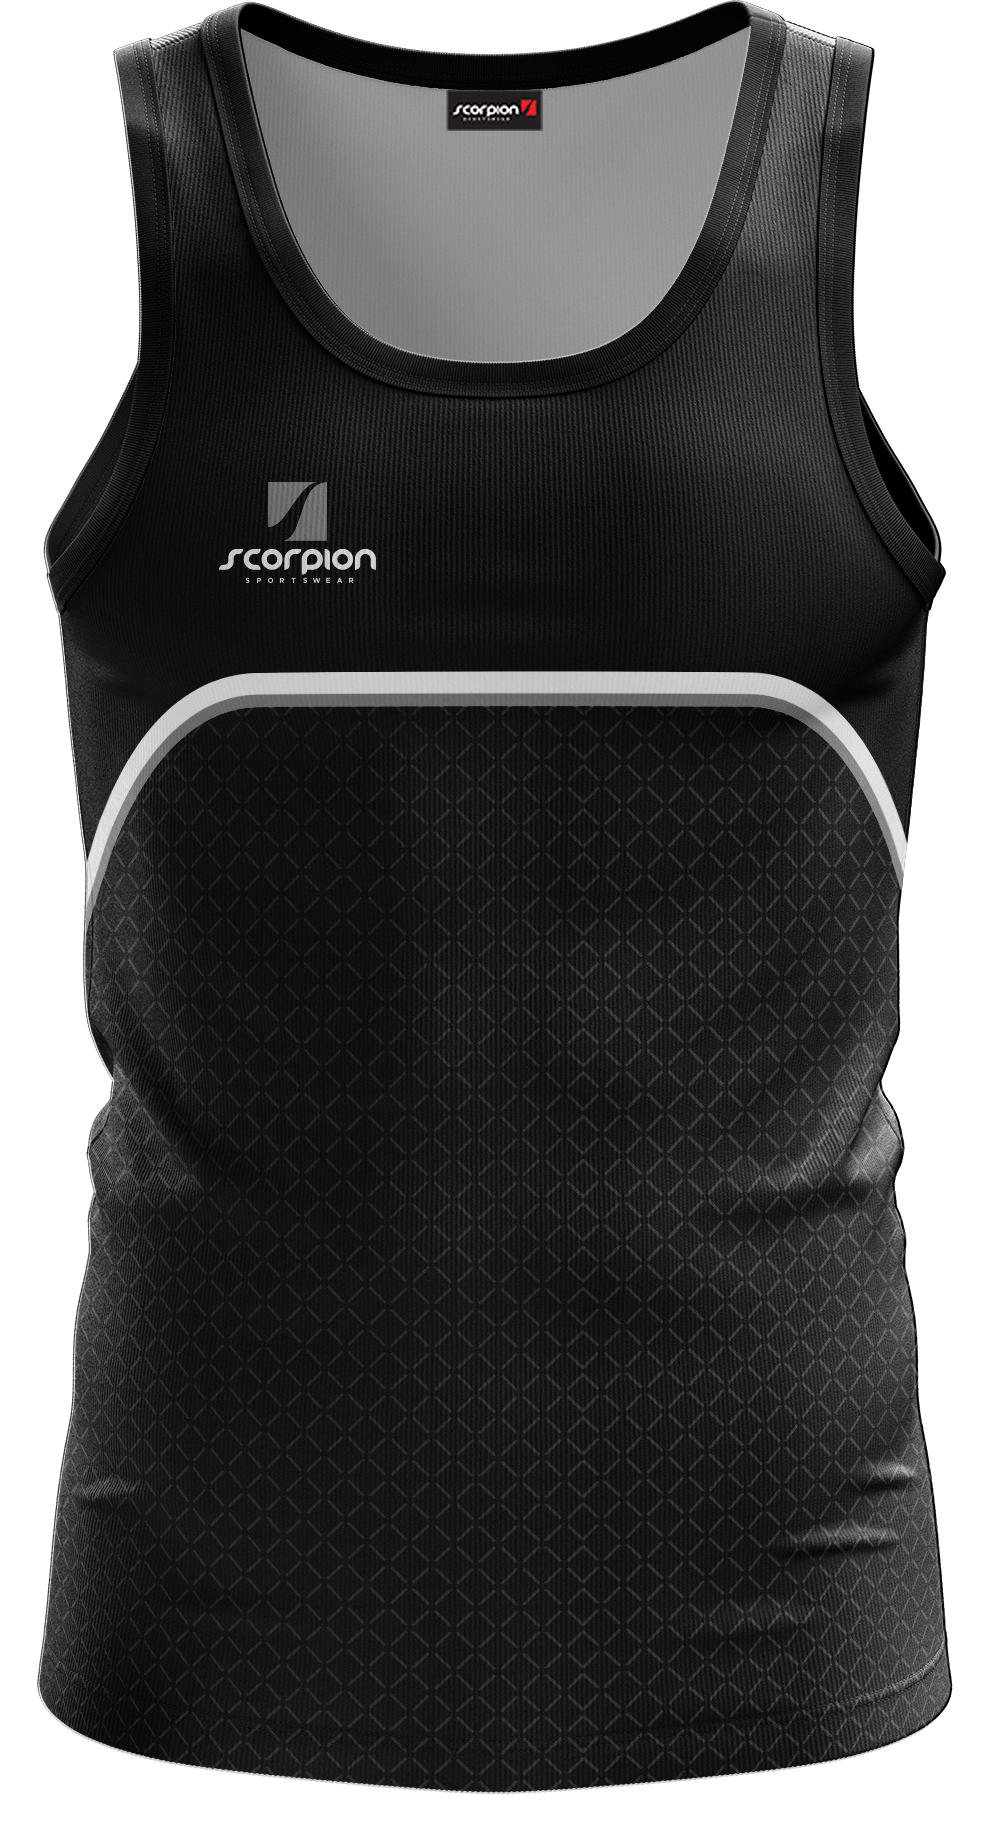 Scorpion Vests Pattern 3 - Black/Charcoal/White